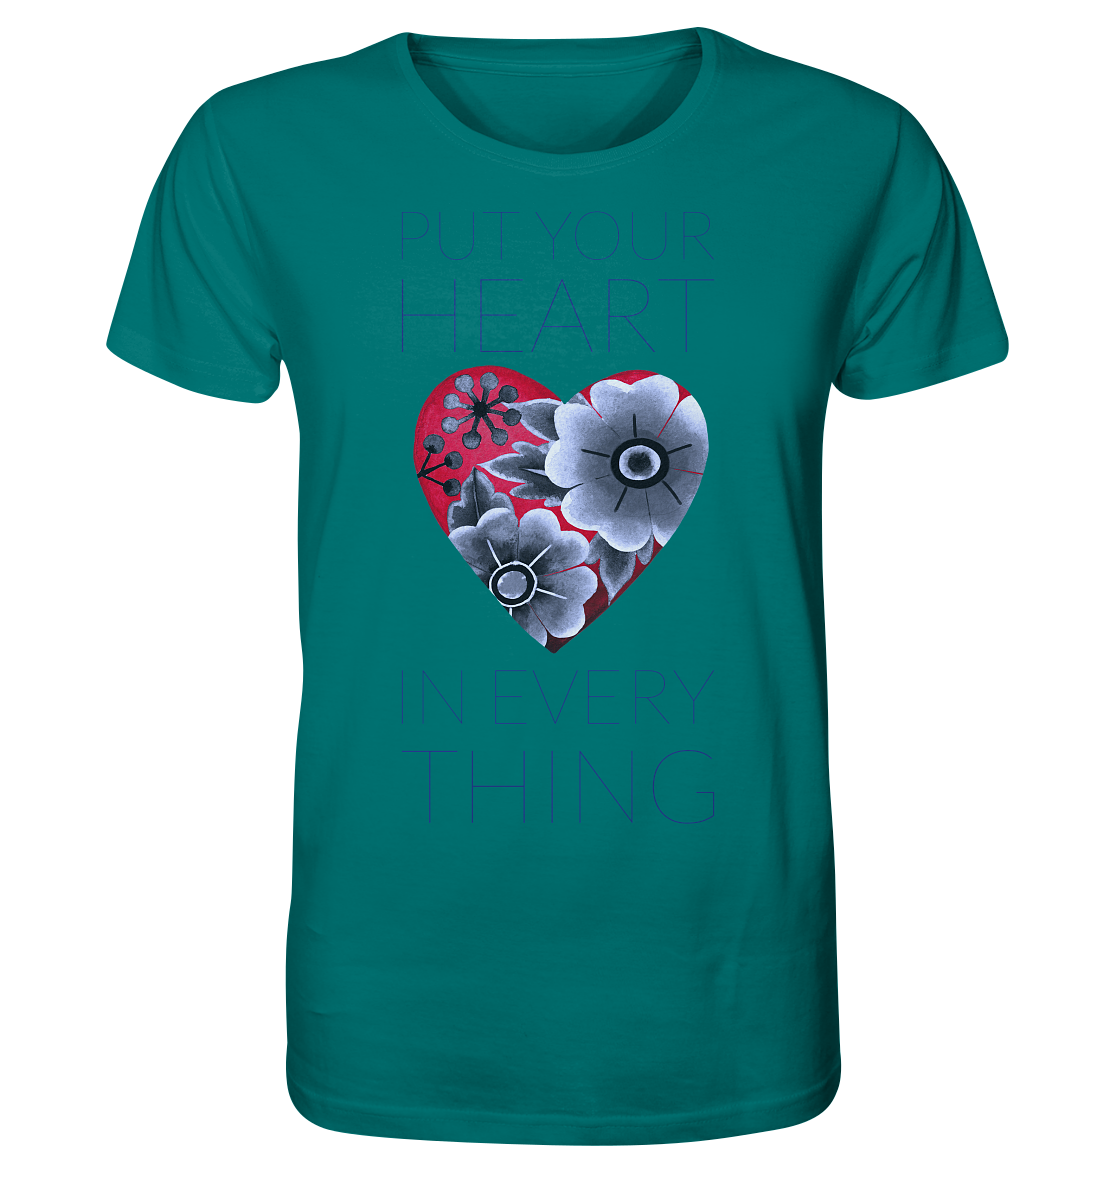 OSA - T shirt in cotone biologico "Put your heart" - Organic Shirt